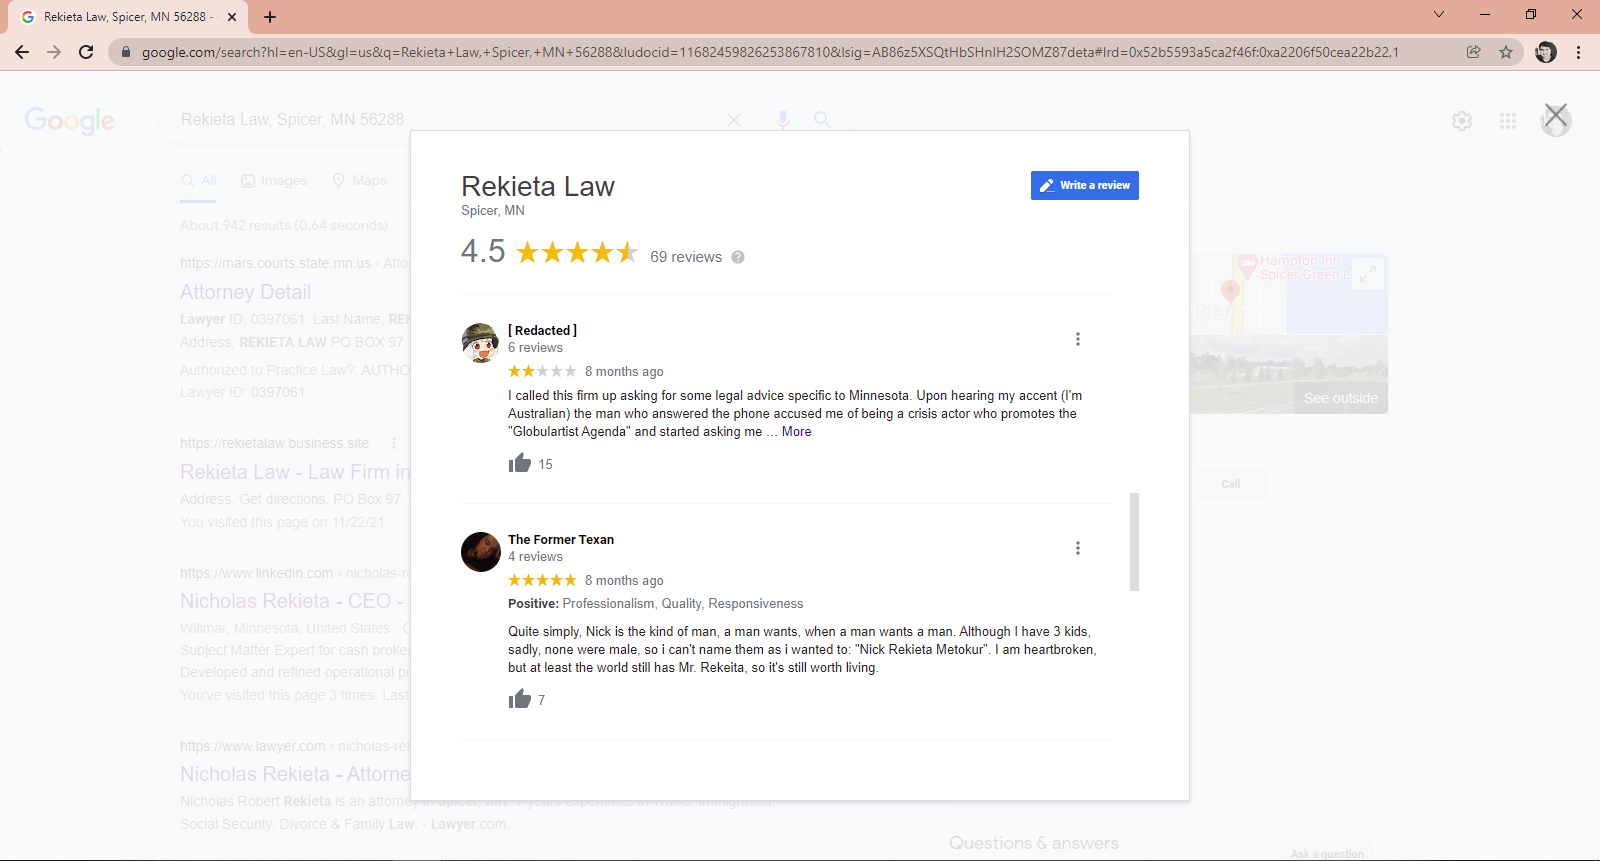 Nick Rekieta Google Ratings11 1.jpg